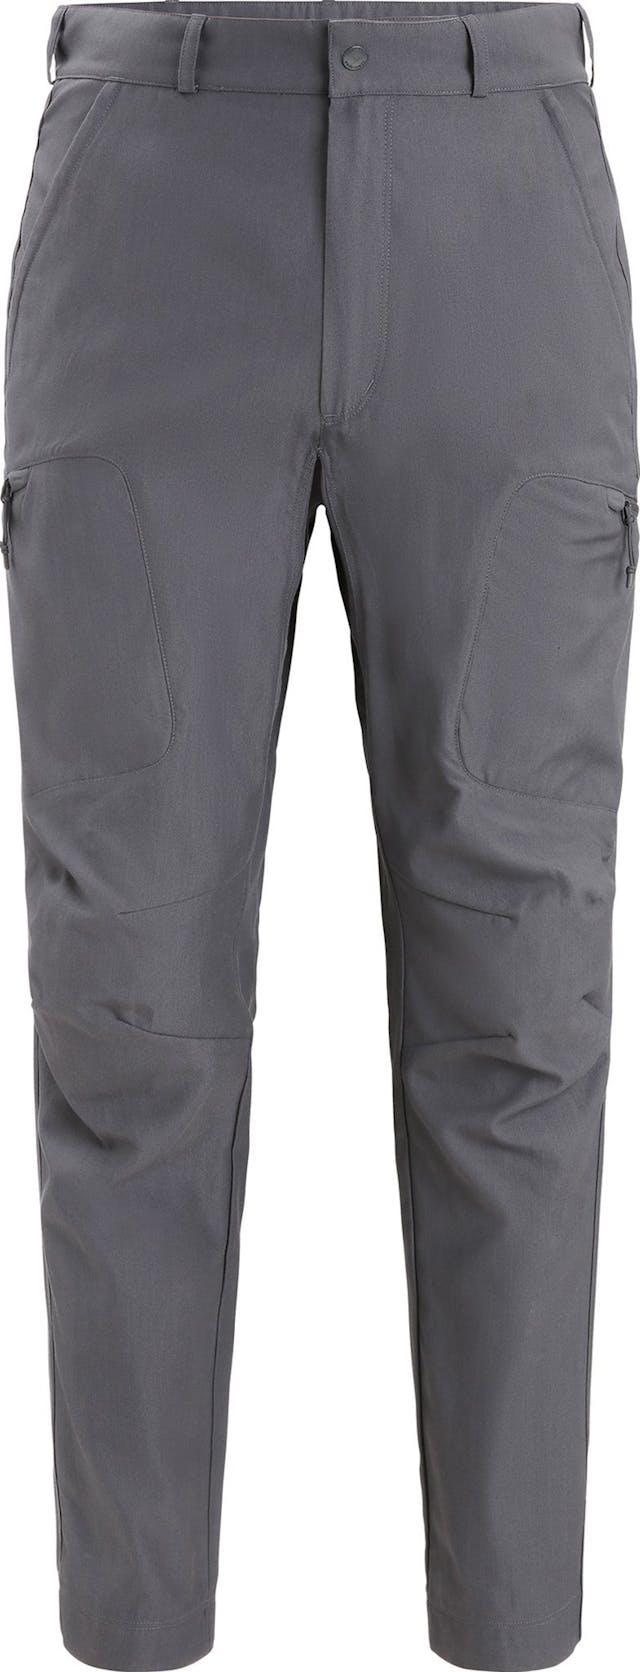 Product image for Merino Hike Pants - Men's